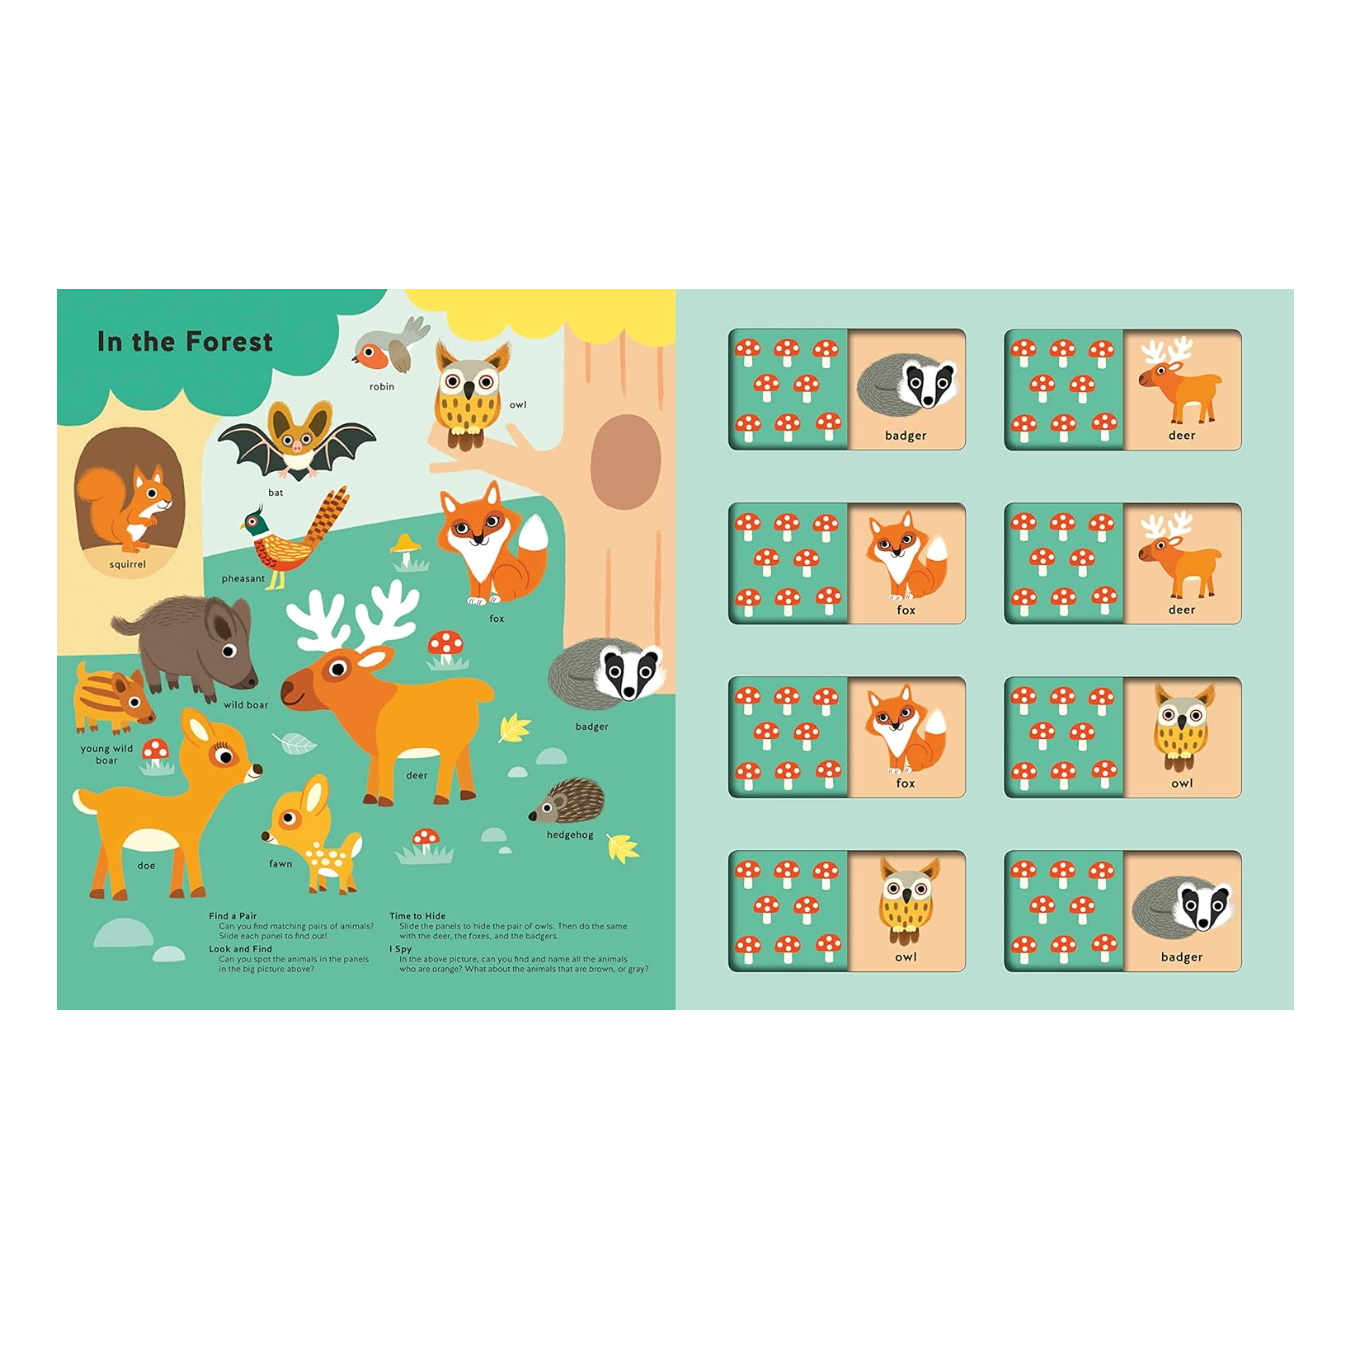 Matching Game Book - Animals